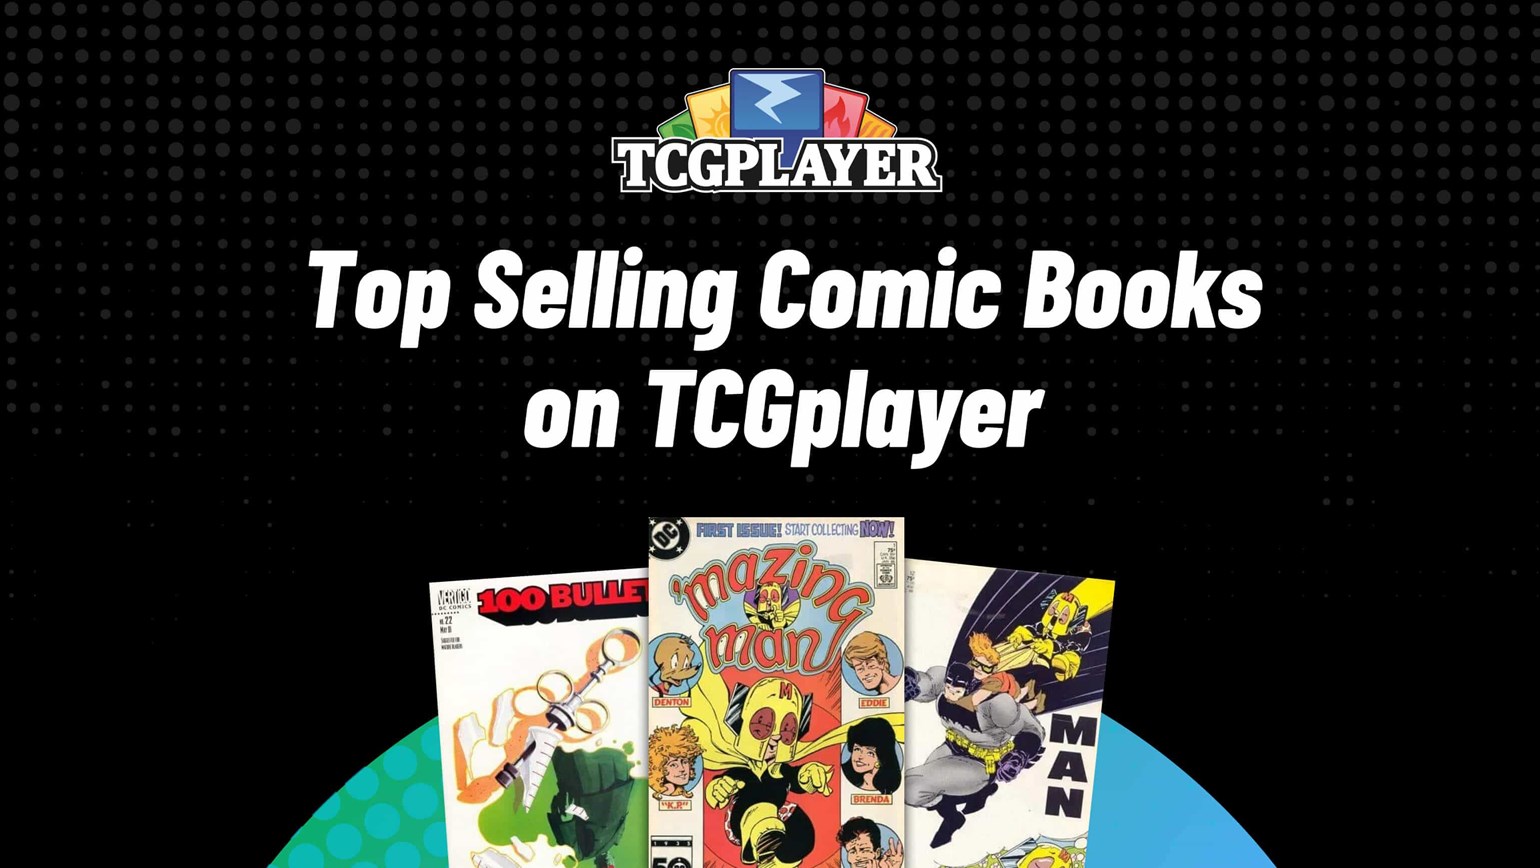 February Top Selling Comic Books on TCGplayer